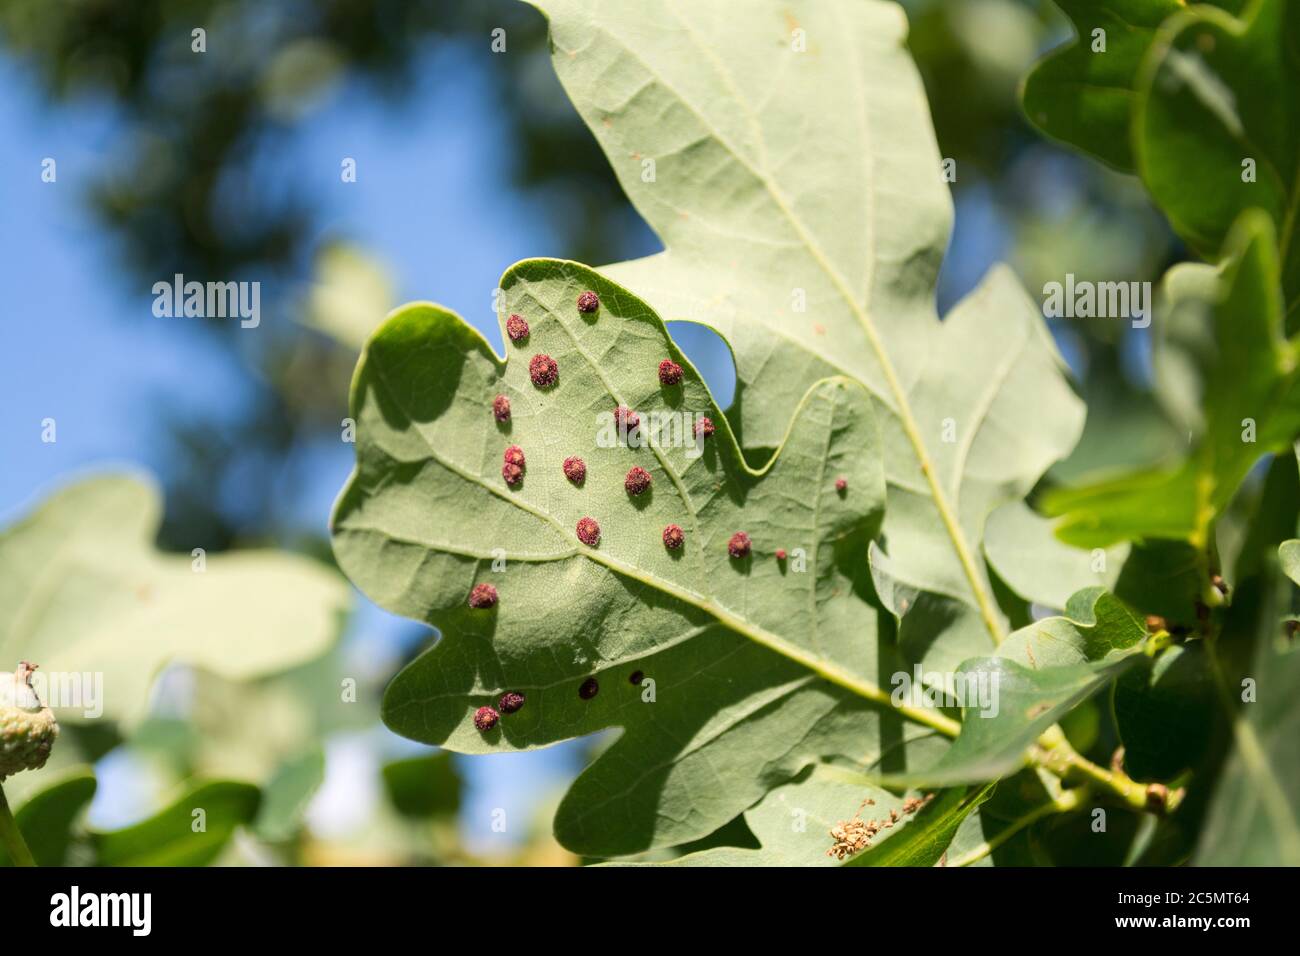 Oak Leaf Gall Midge (Polystepha pilulae) on the underside of an Oakleaf Stock Photo